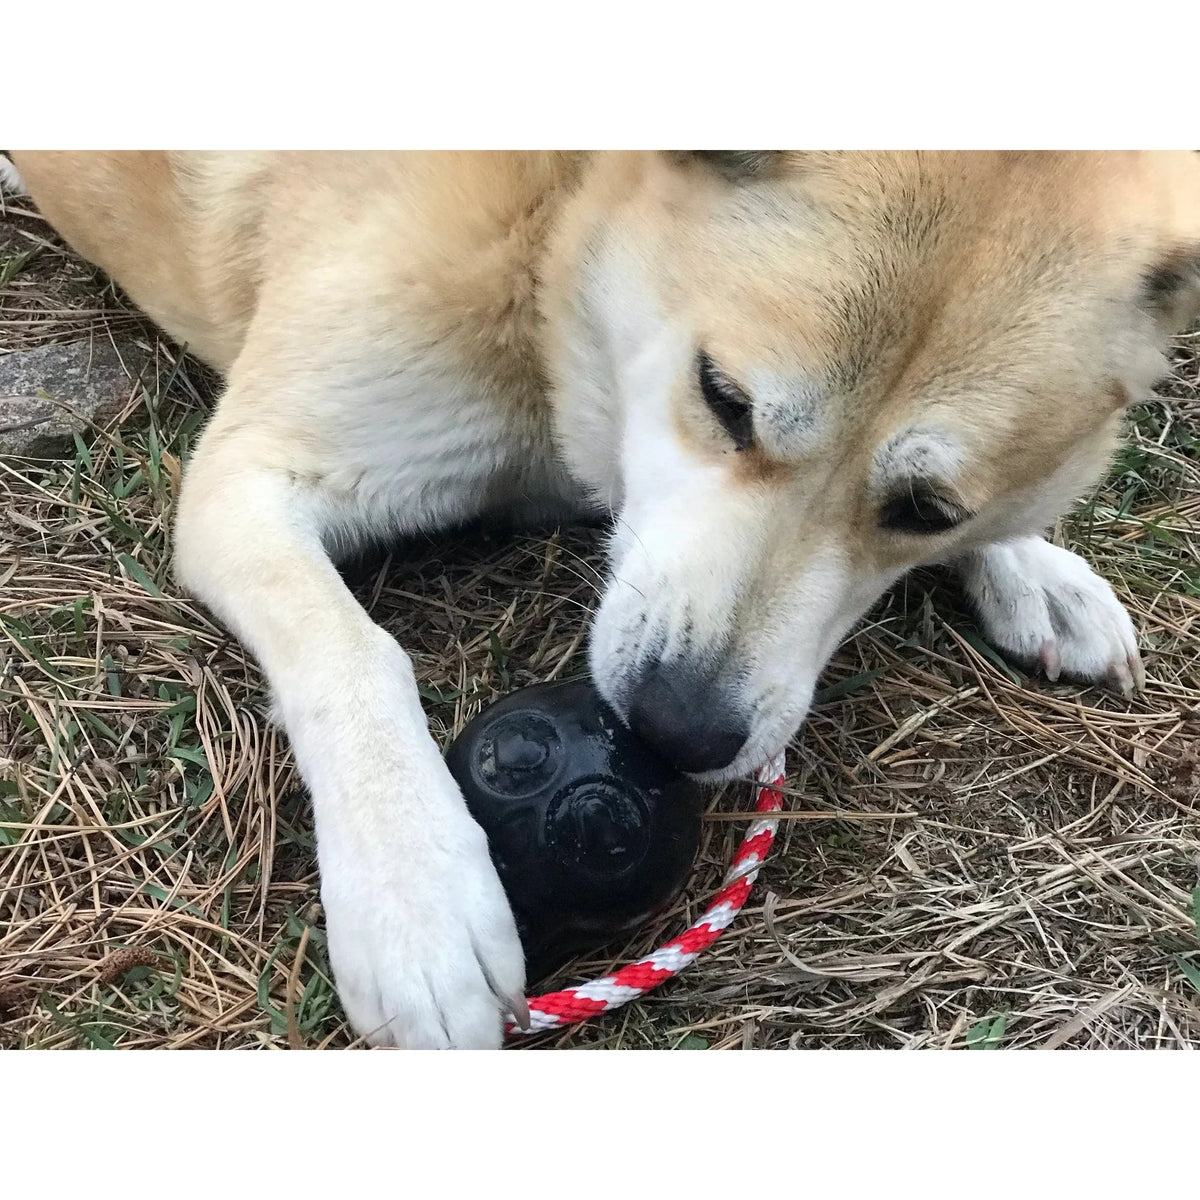 SodaPup/True Dogs, LLC LARGE BLACK SKULL REWARD USA-K9 Magnum Skull Durable Rubber Chew Toy, Treat Dispenser, Reward Toy, Tug Toy, and Retrieving Toy - Black Magnum by SodaPup/True Dogs, LLC